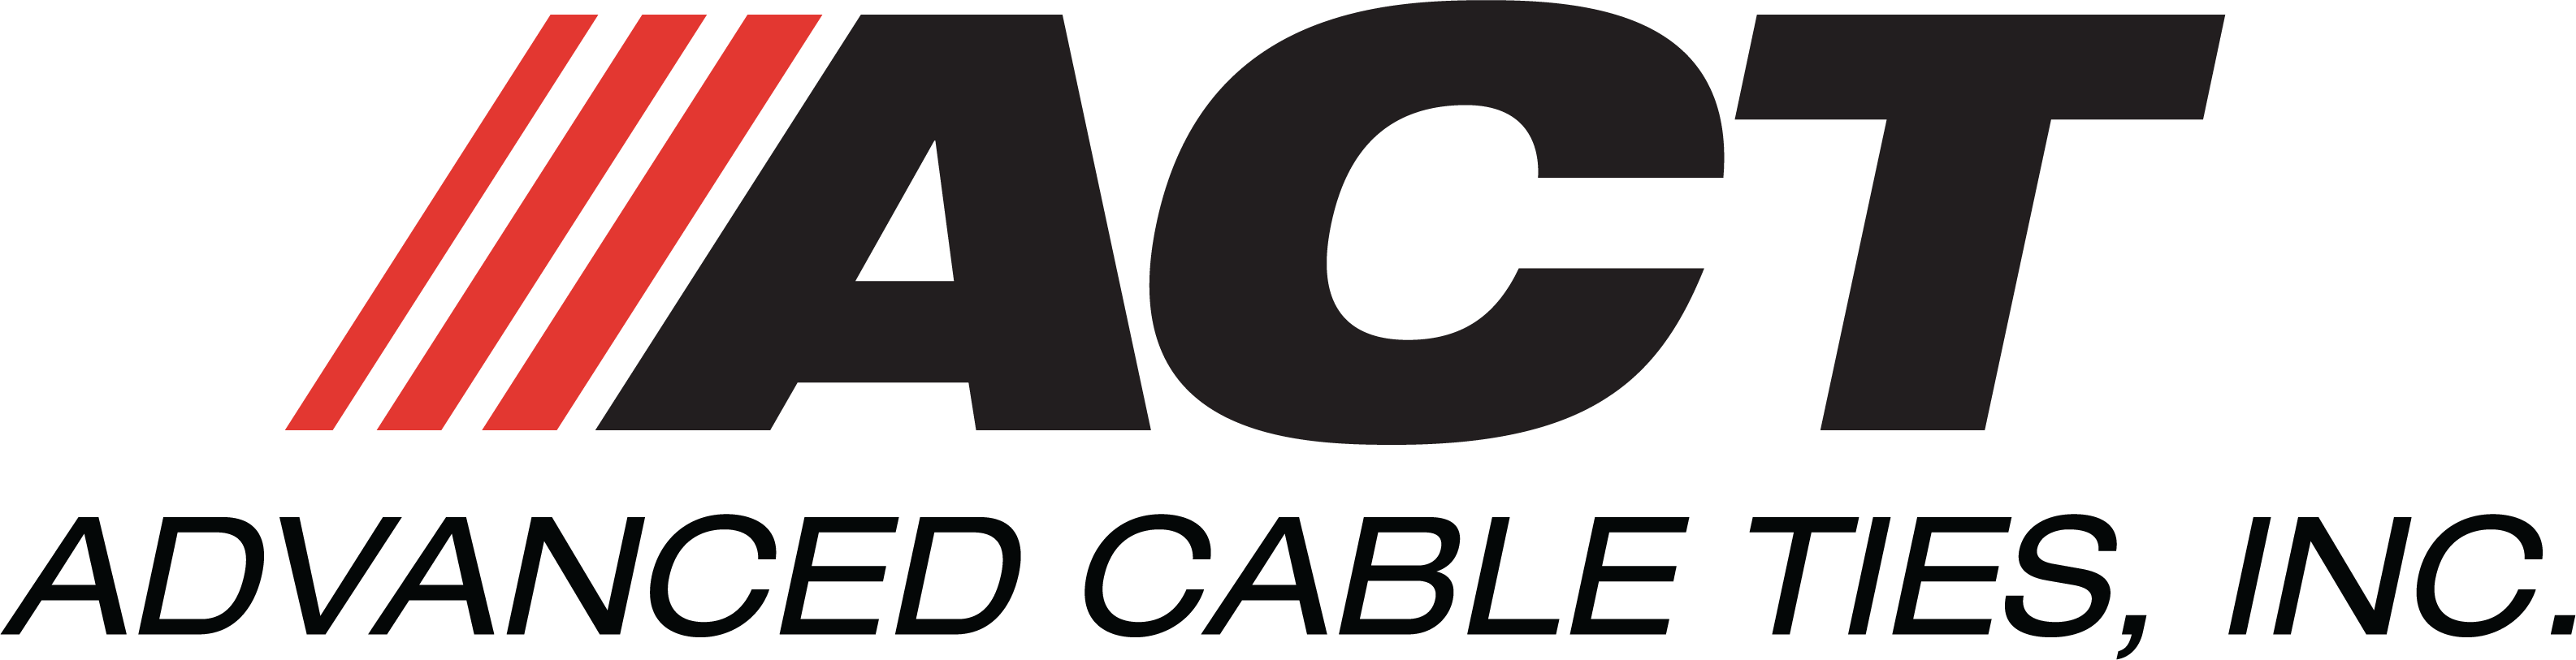 Advanced Cable Ties, Inc. LOGO